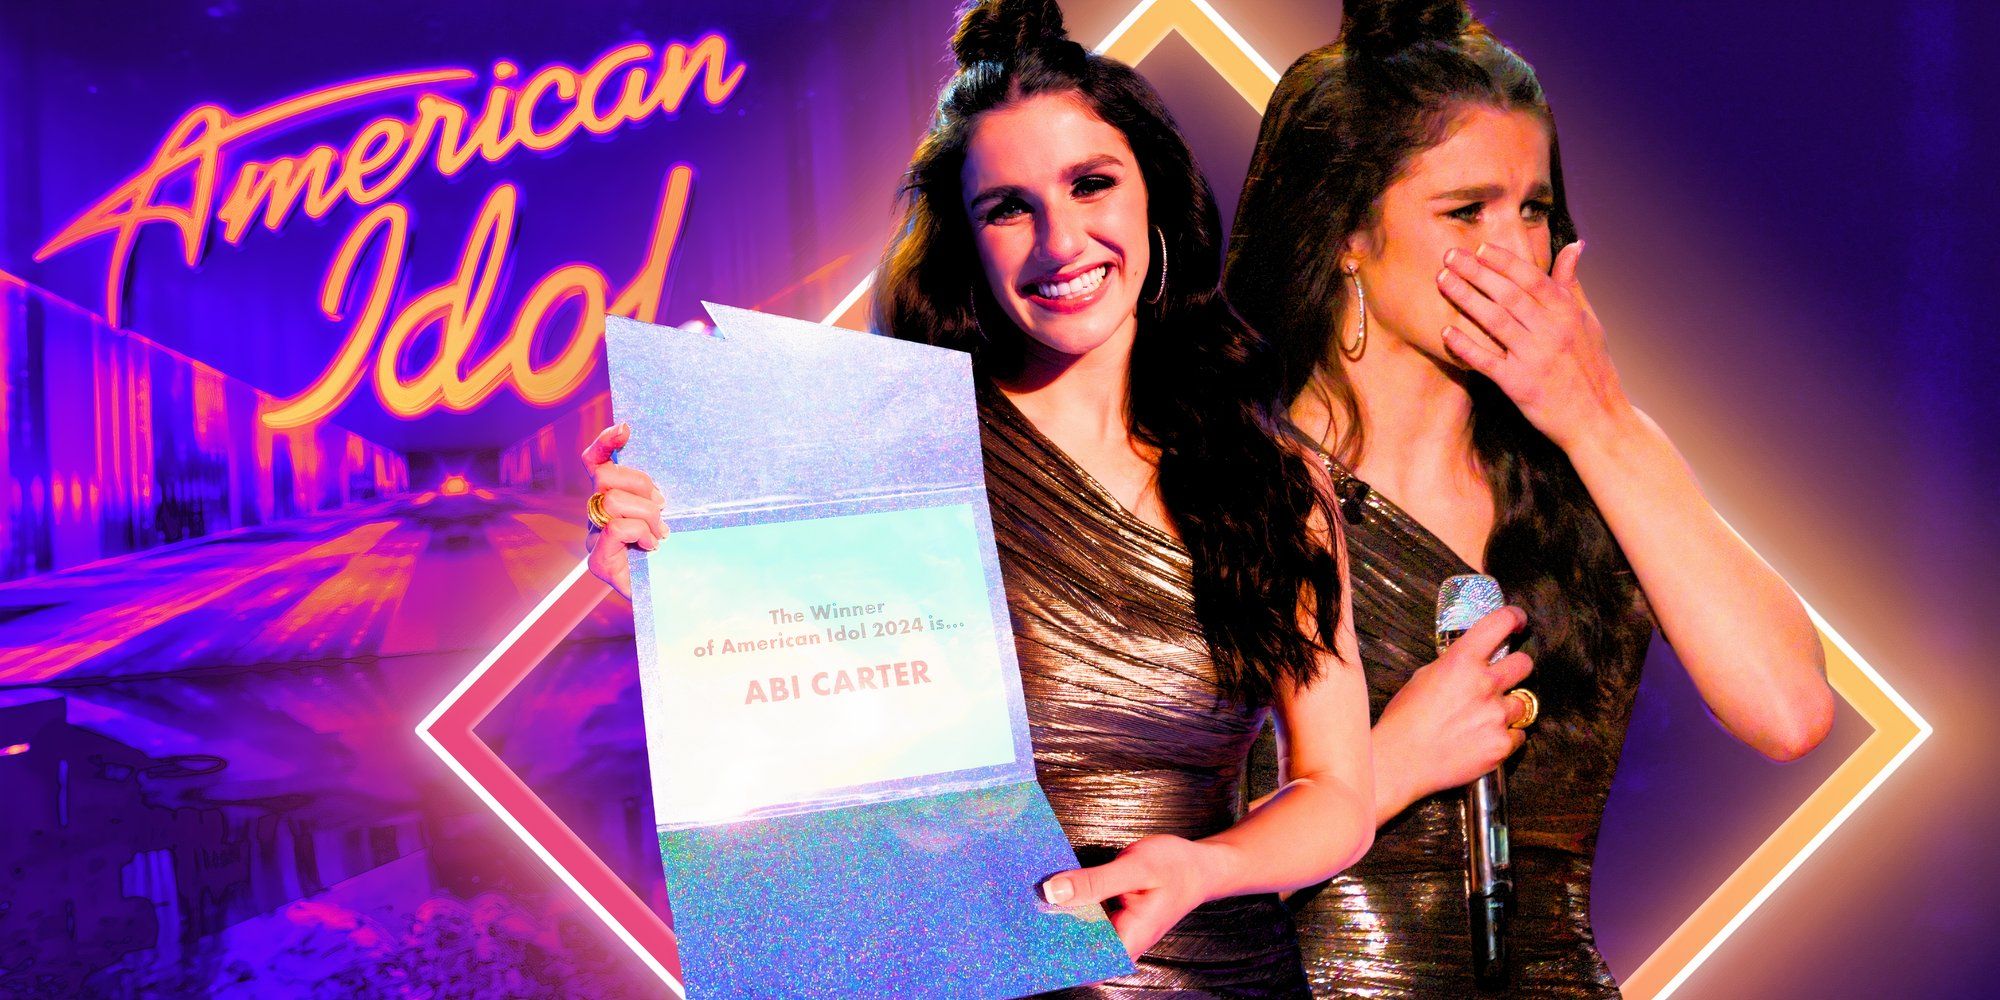 American Idol Season 22 Winner Abi Carter holds the winner card and gets emotional after winning.